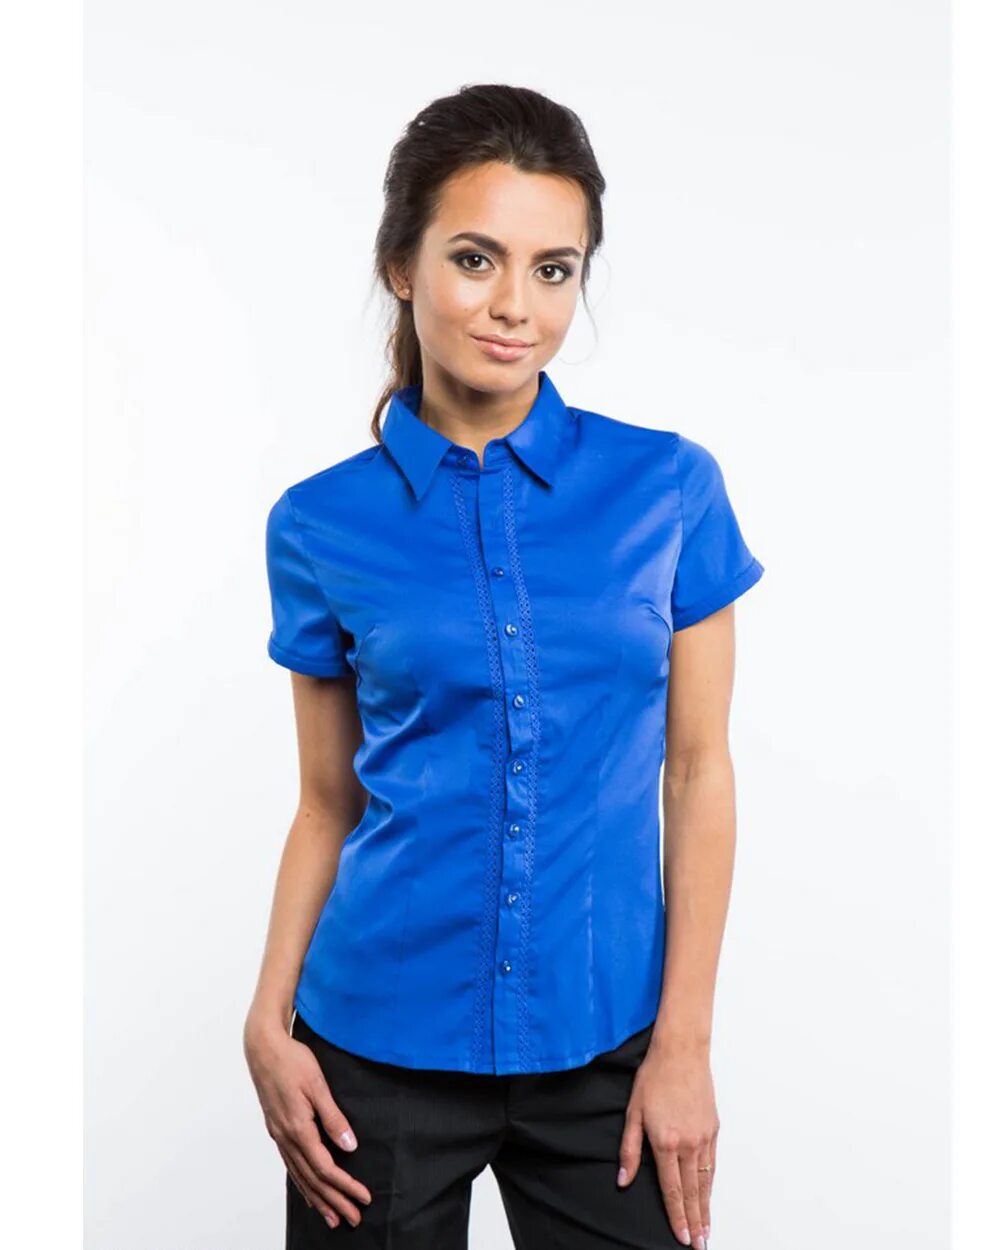 44 размер блузки. Синяя рубашка женская. Блузка с коротким рукавом. Блузка женская с коротким рукавом. Рубашка с коротким рукавом женская.